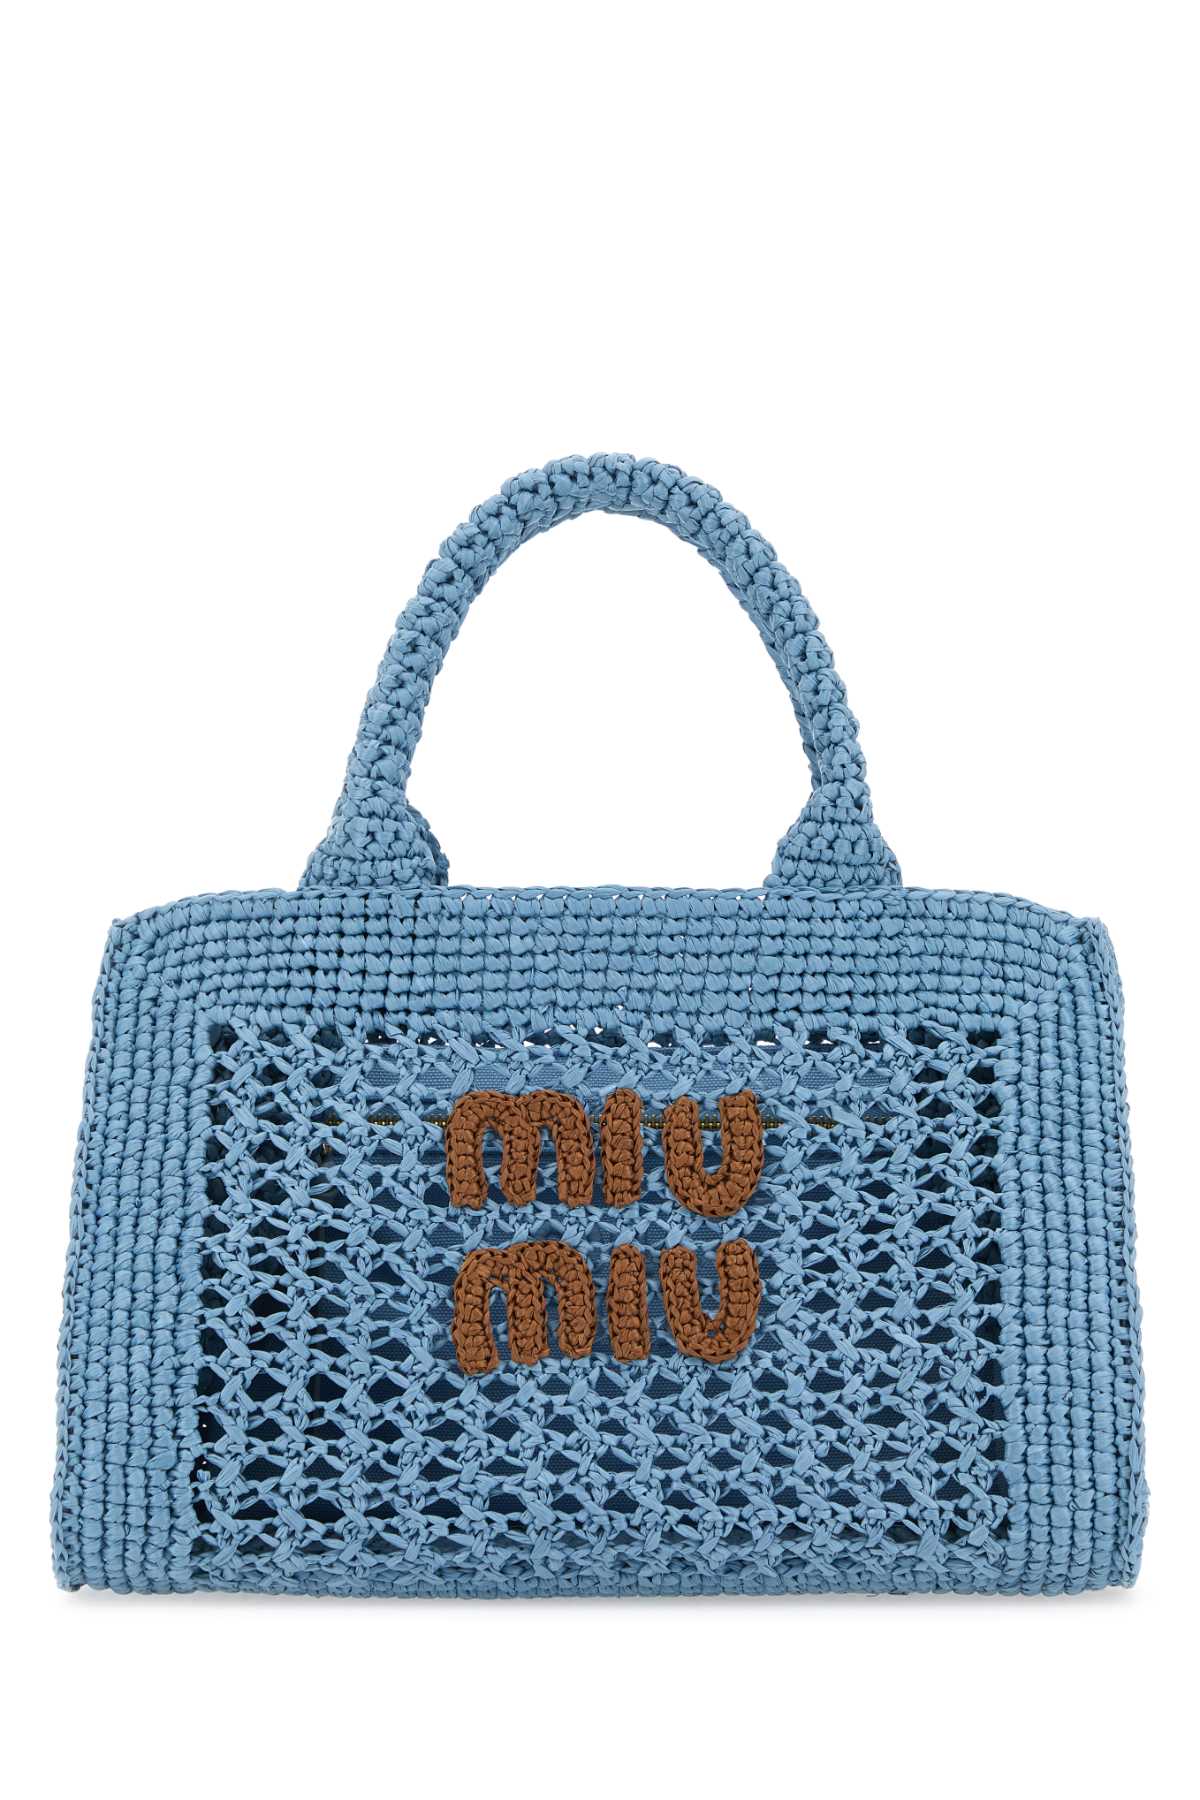 Shop Miu Miu Light Blue Crochet Handbag In Celestecognac